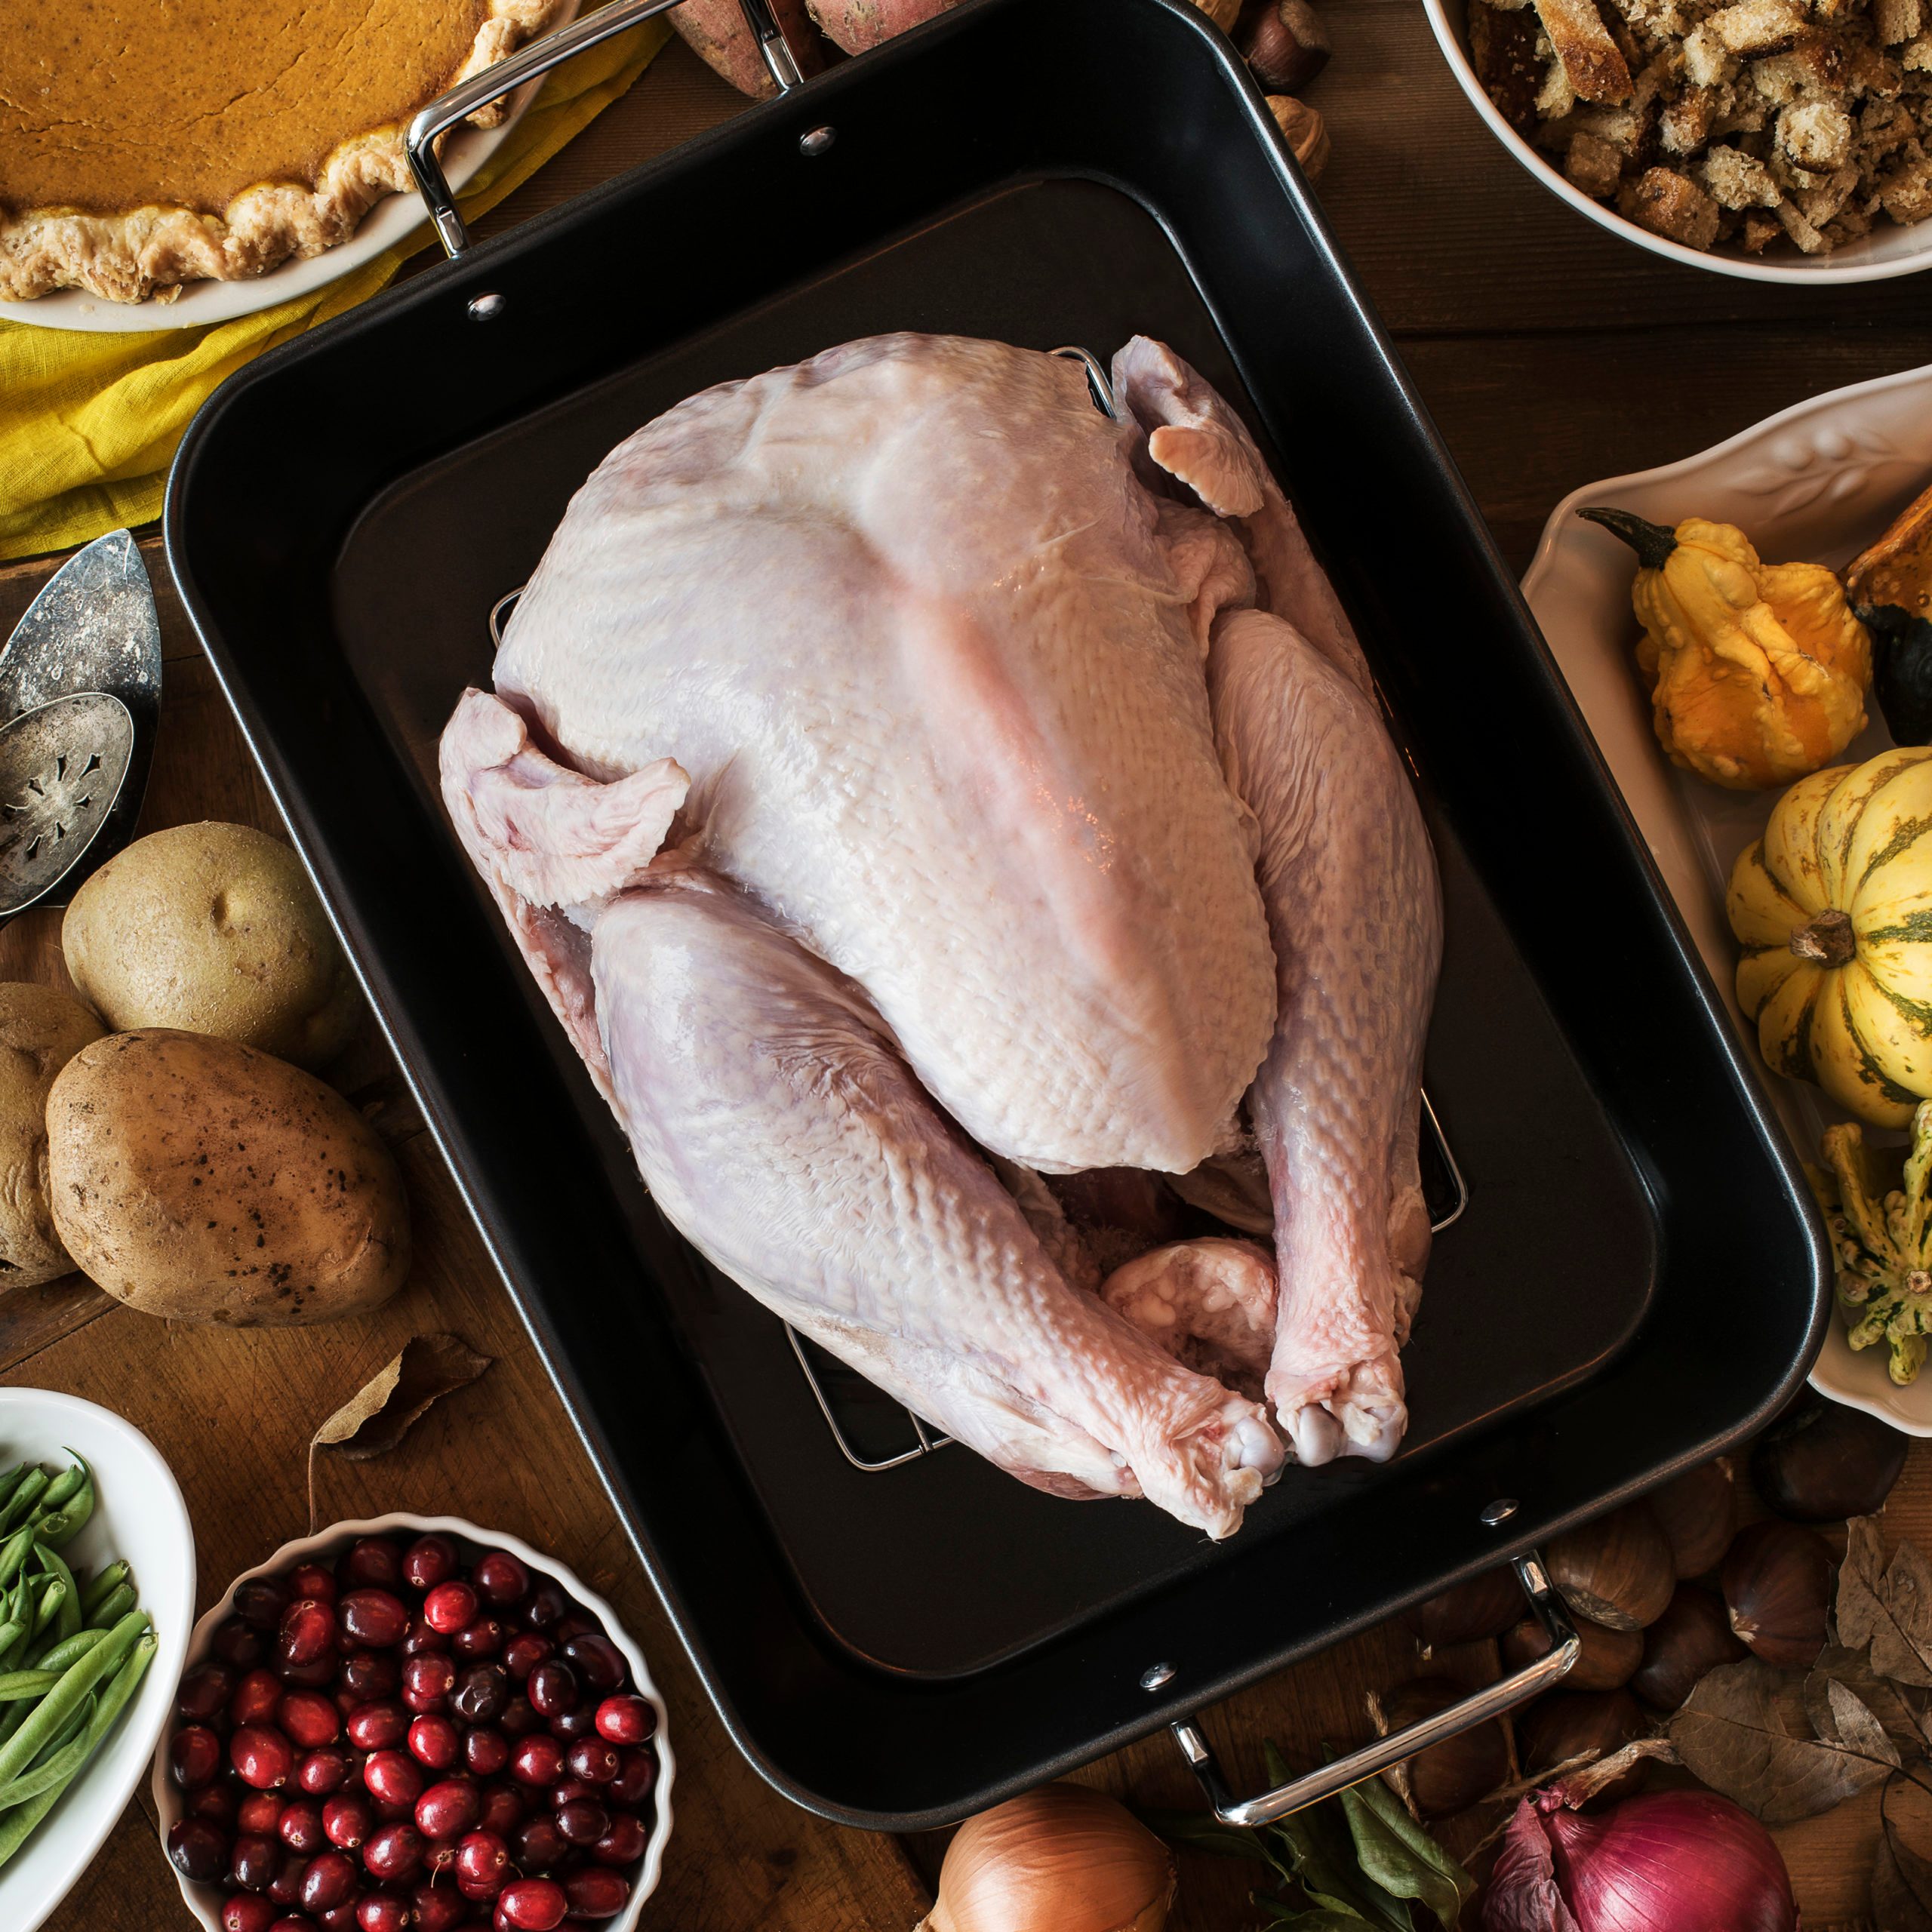 View of preparation of thanksgiving turkey